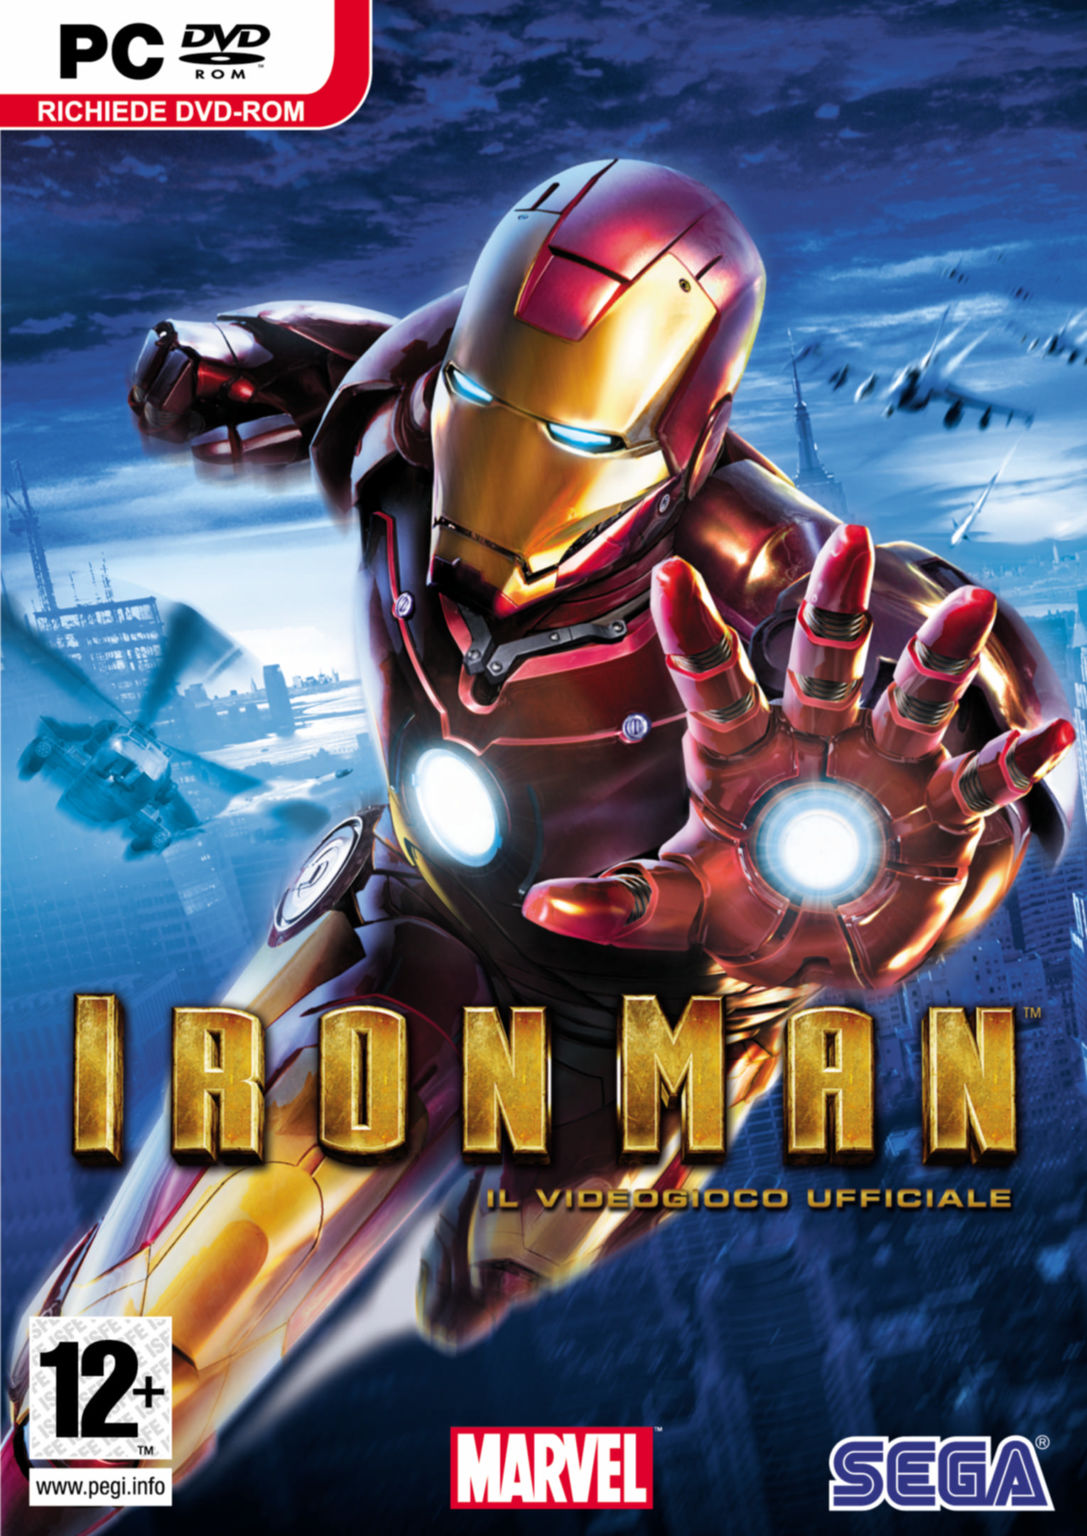 [PC Games] Iron Man খেলুন এবার আপনার পিসিতে মূল সাইজ 1.73GB তাও আবার Highly Compressed 205MB  ডাউনলোড লিংক সাথে রিভিউ